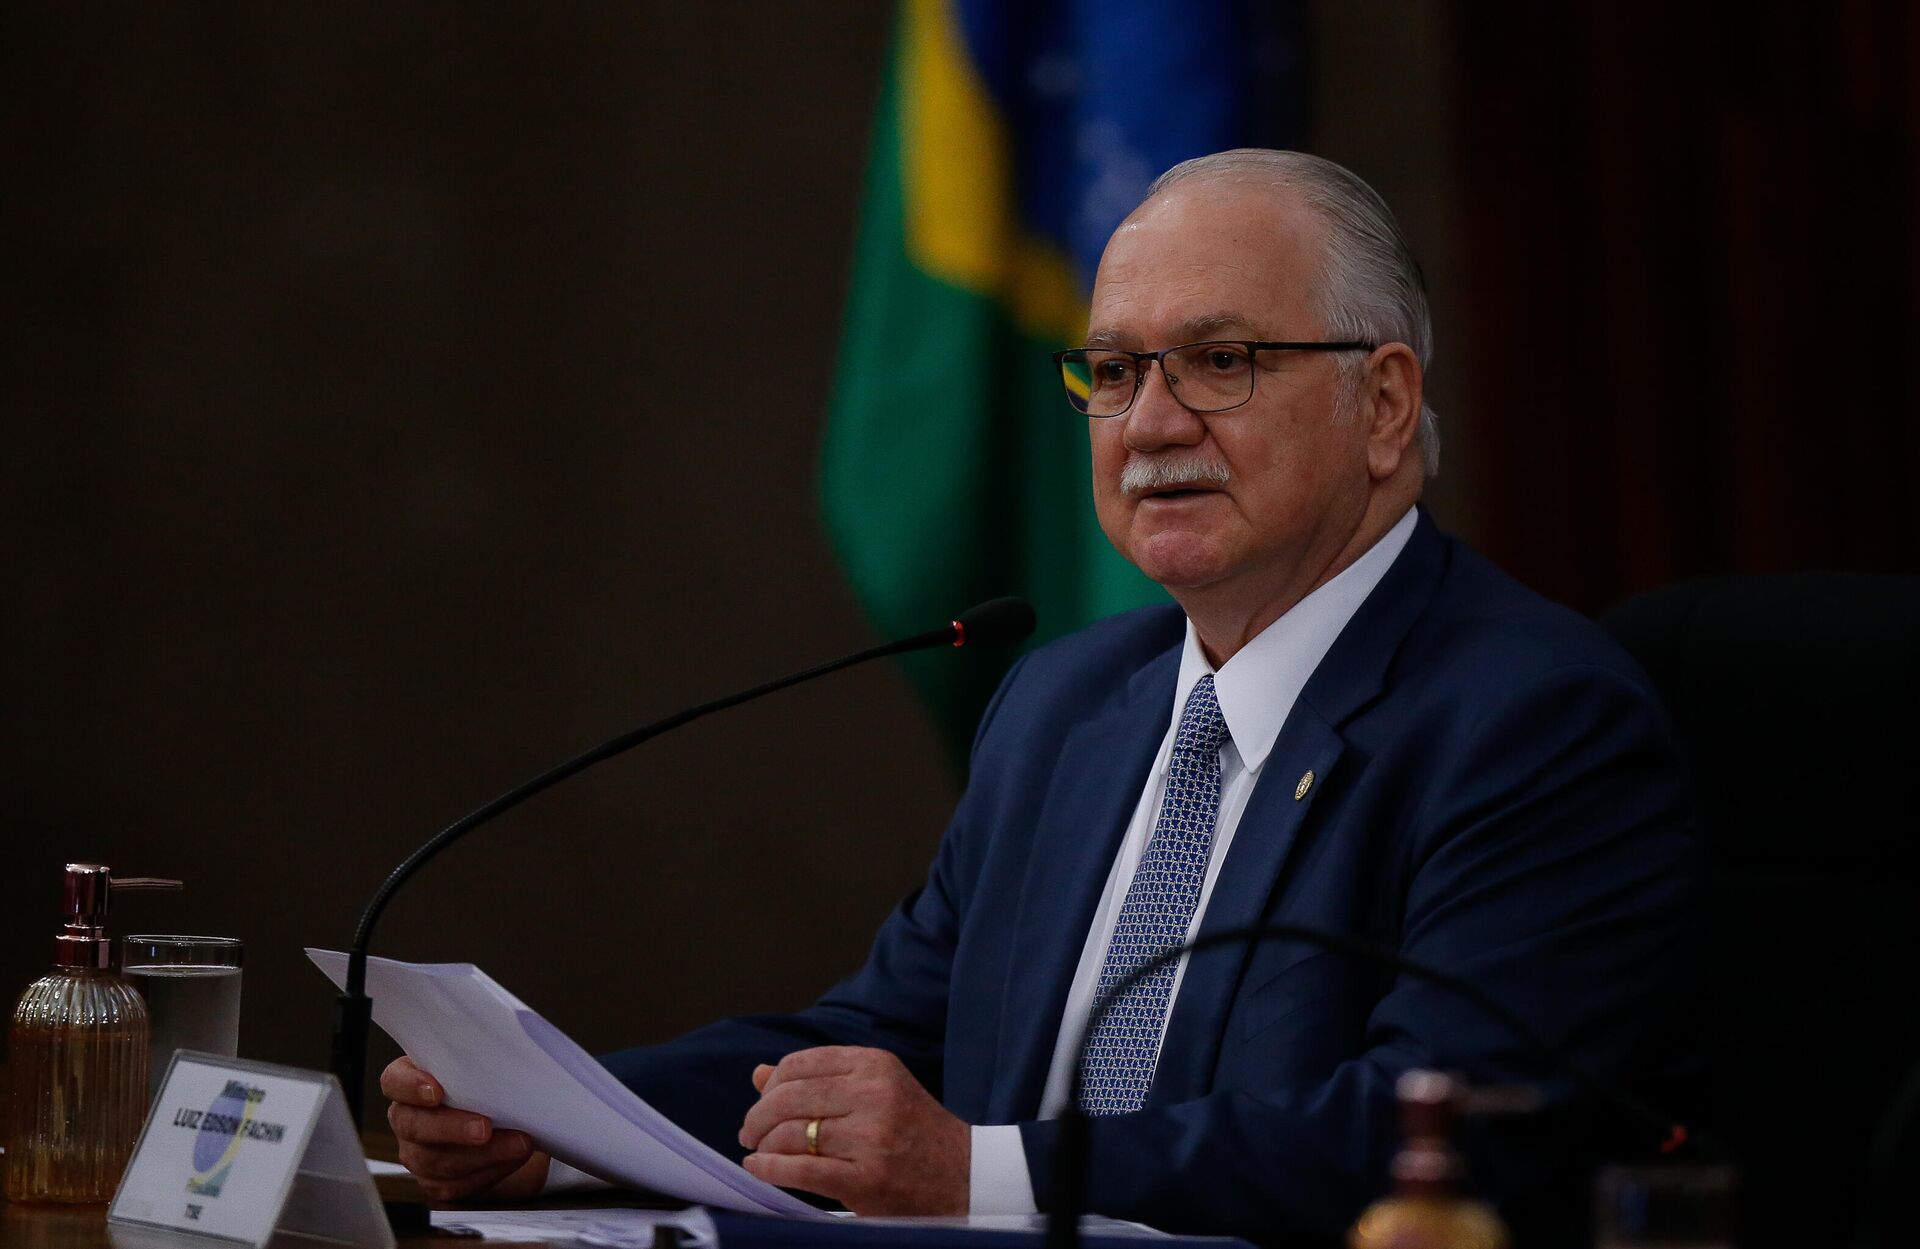 Ministro Luiz Edson Fachin, presidente do TSE, durante coletiva de imprensa após sua posse, 10 de março de 2022 - Sputnik Brasil, 1920, 22.03.2022